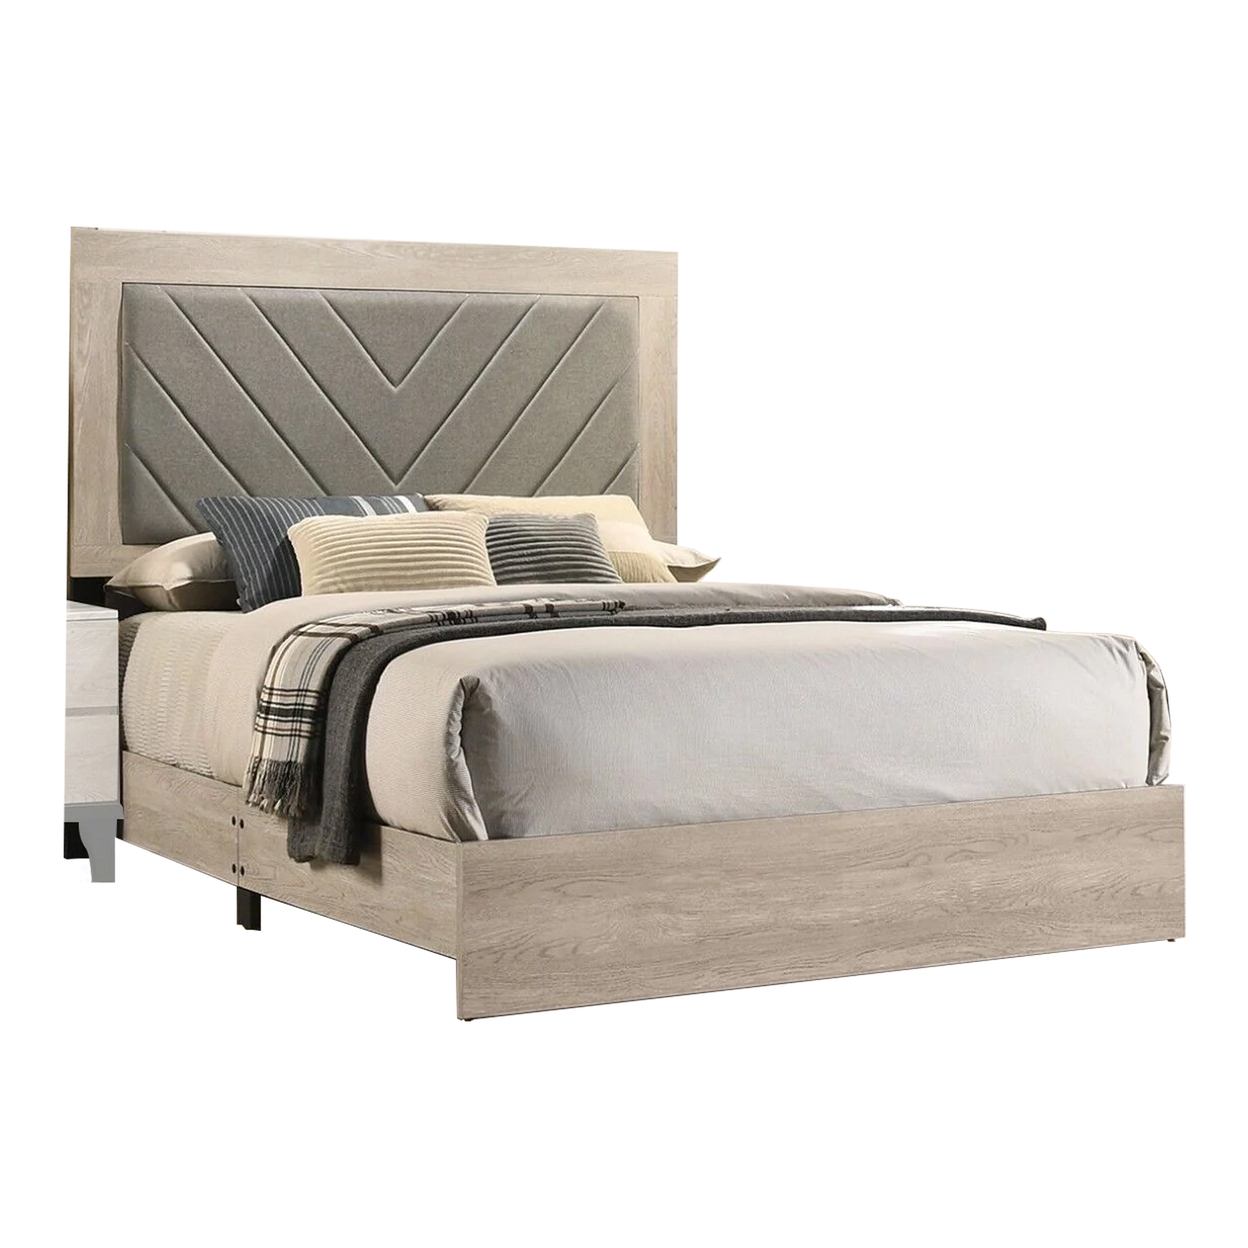 Cato Upholstered King Size Bed, Chevron Tufted Gray Headboard, Cream Finish- Saltoro Sherpi